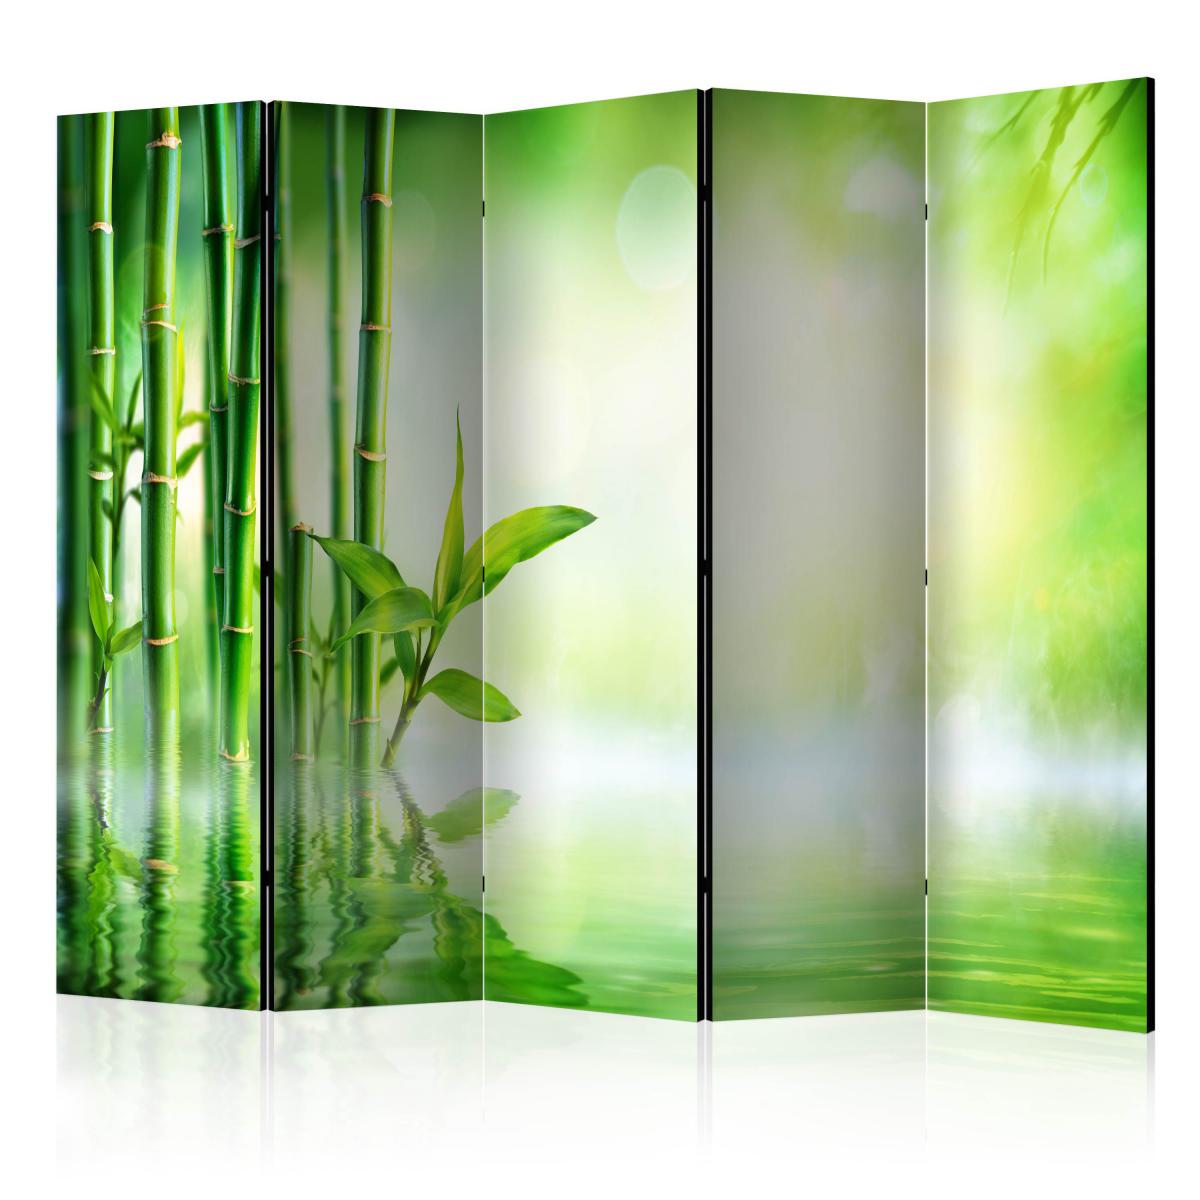 Bimago - Paravent 5 volets - Green Bamboo II [Room Dividers] - Décoration, image, art | 225x172 cm | XL - Grand Format | - Cloisons